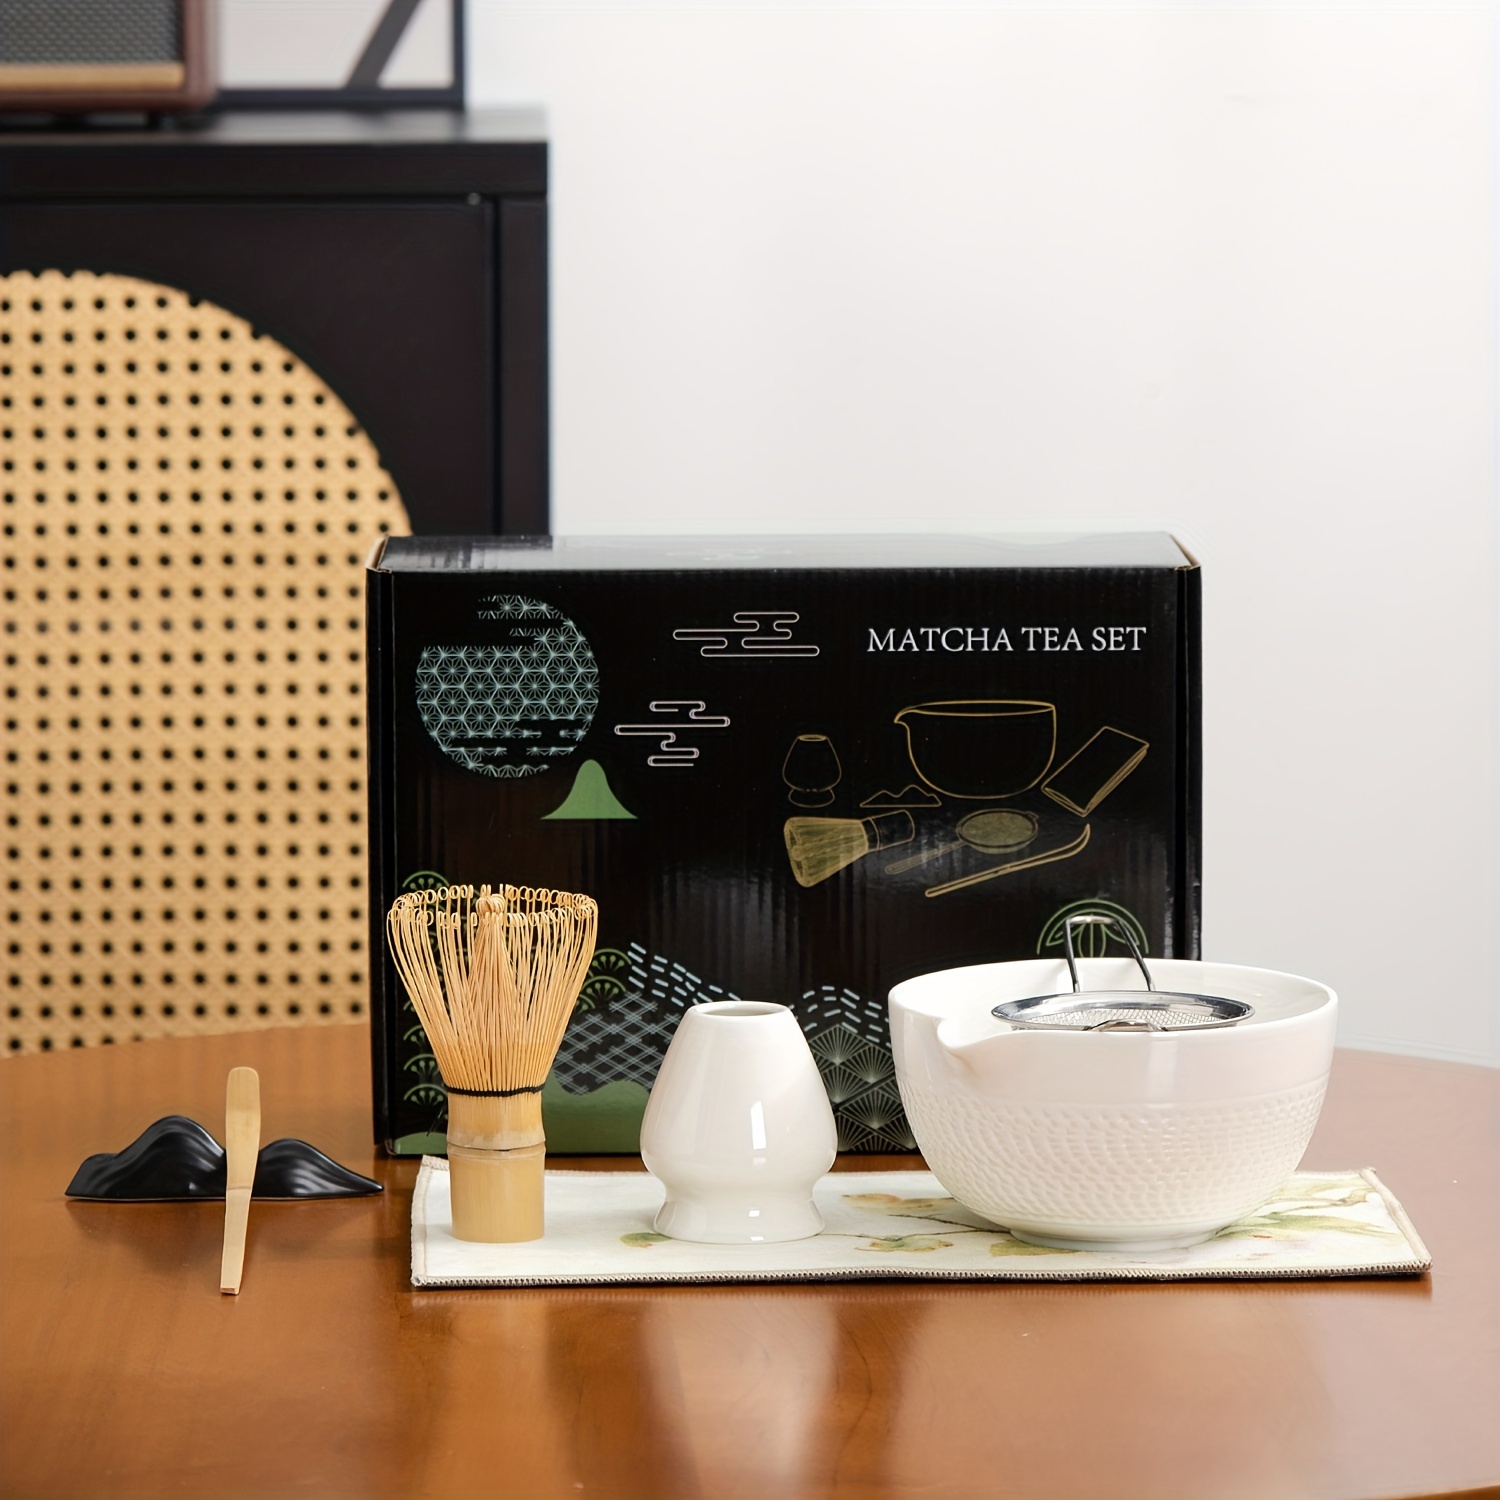  Kit completo de té Matcha, batidor de bambú natural japonés  retro (Chasen), cucharada, cuenco matcha, soporte para batidor, juegos de té  Matcha de ceremonia : Hogar y Cocina